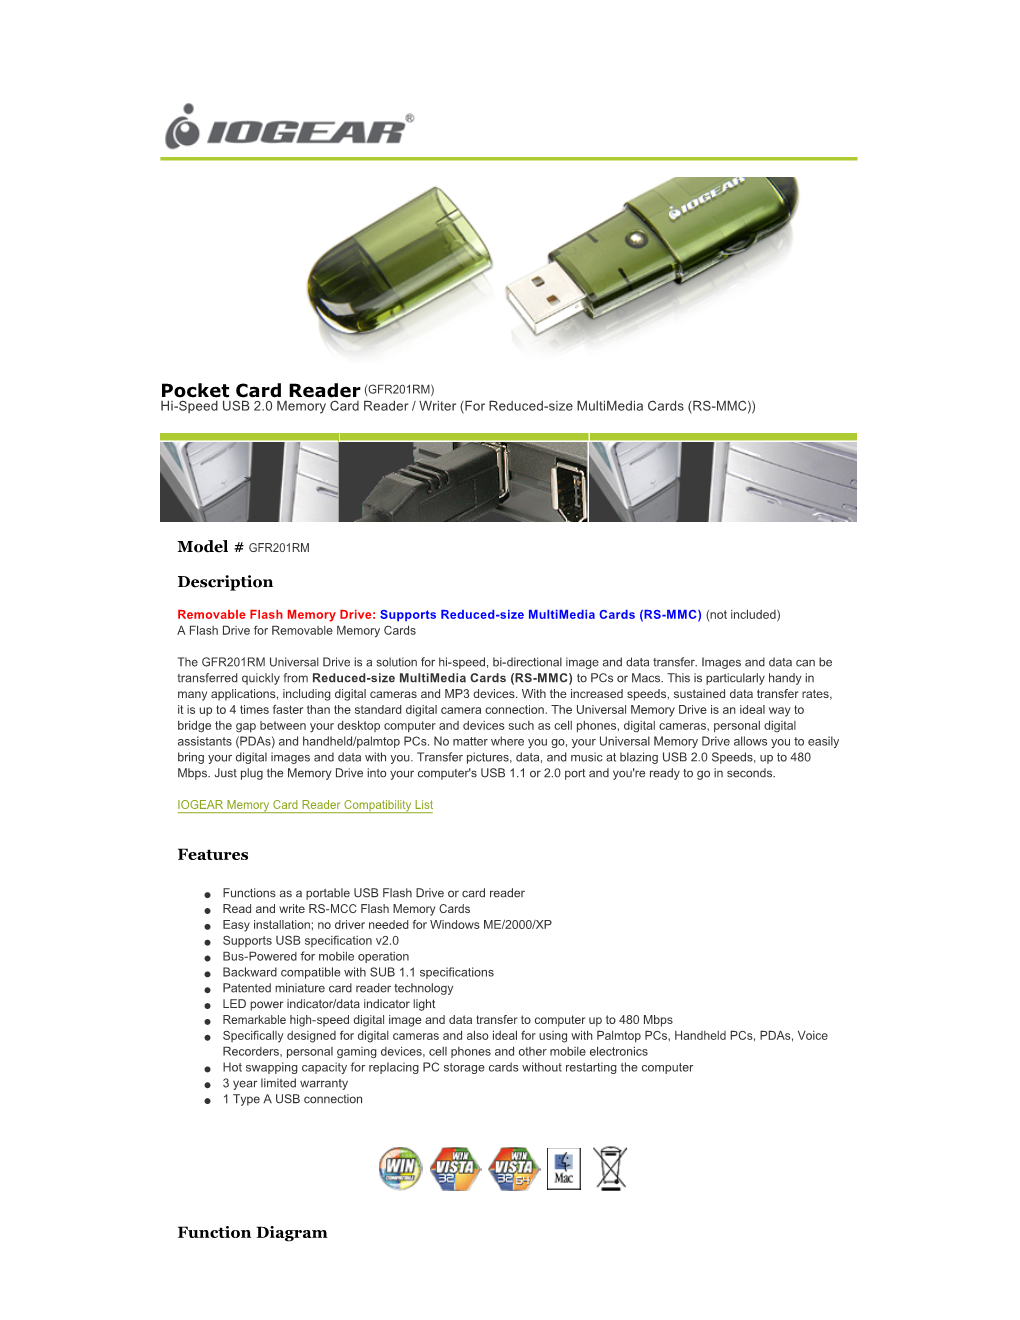 Pocket Card Reader (GFR201RM) Hi-Speed USB 2.0 Memory Card Reader / Writer (For Reduced-Size Multimedia Cards (RS-MMC))